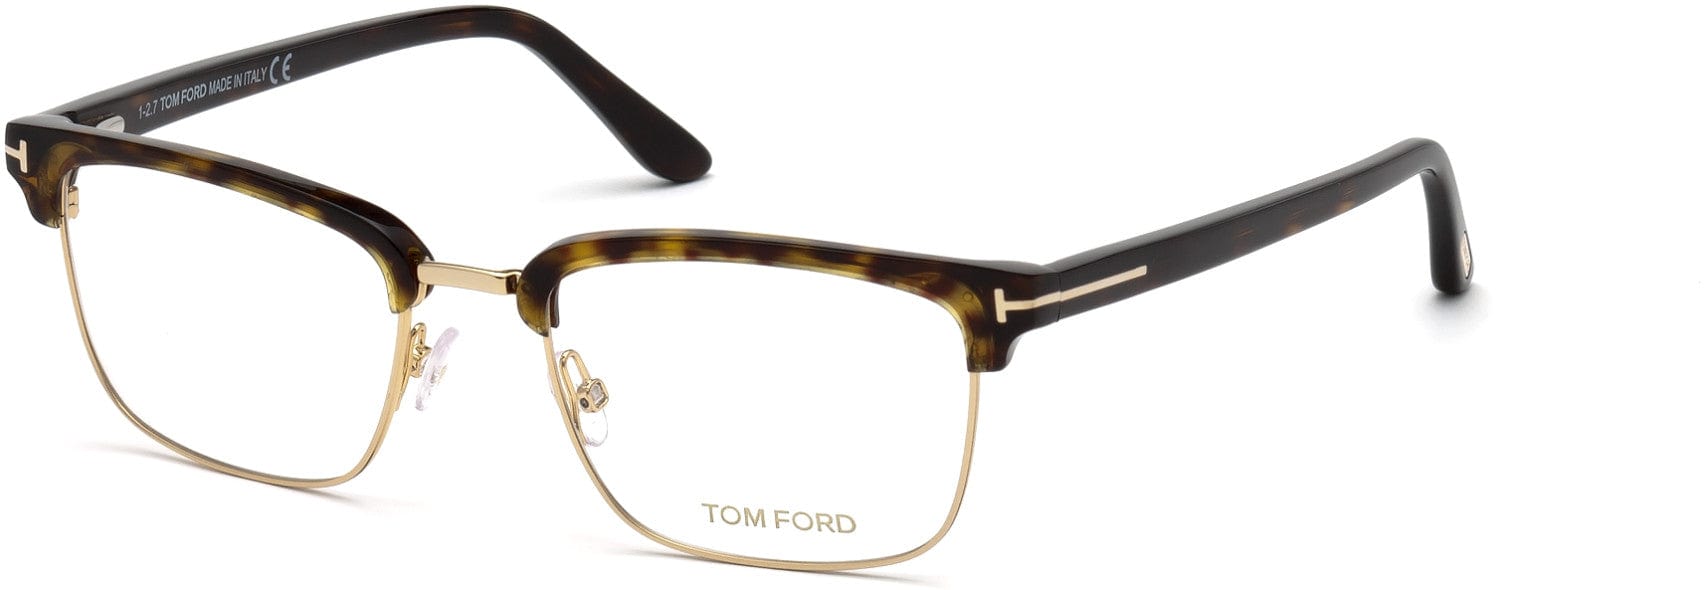 Tom Ford FT5504 Geometric Eyeglasses 052-052 - Shiny Classic Havana Acetate Front & Temples, Rose Gold Metal